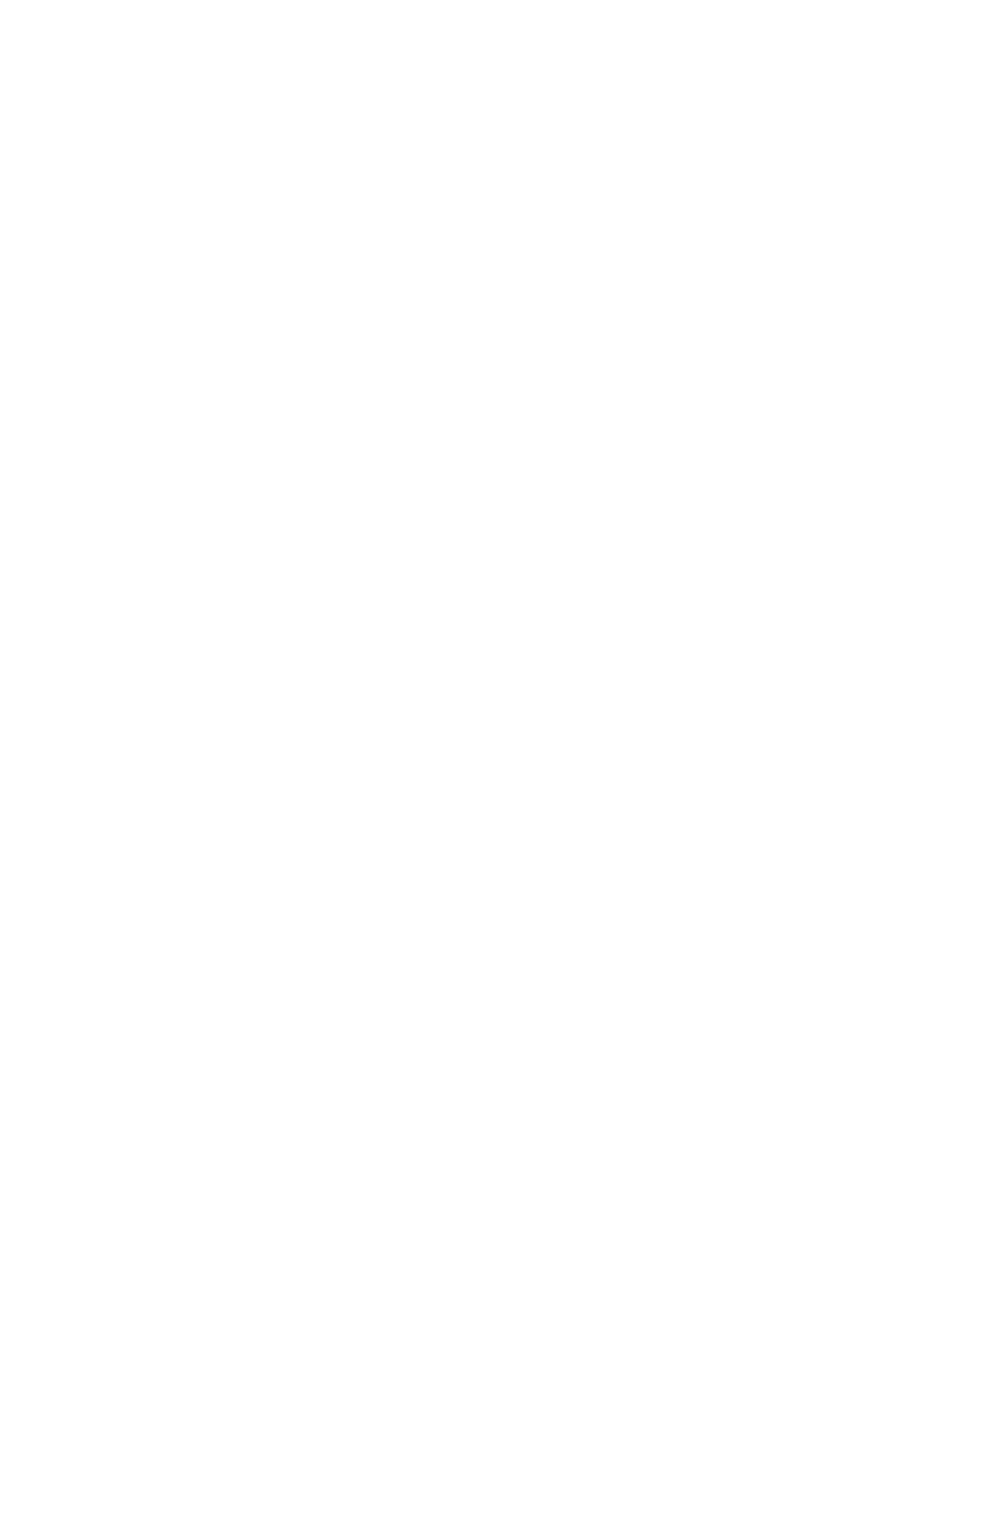 LanzaTech Global logo for dark backgrounds (transparent PNG)